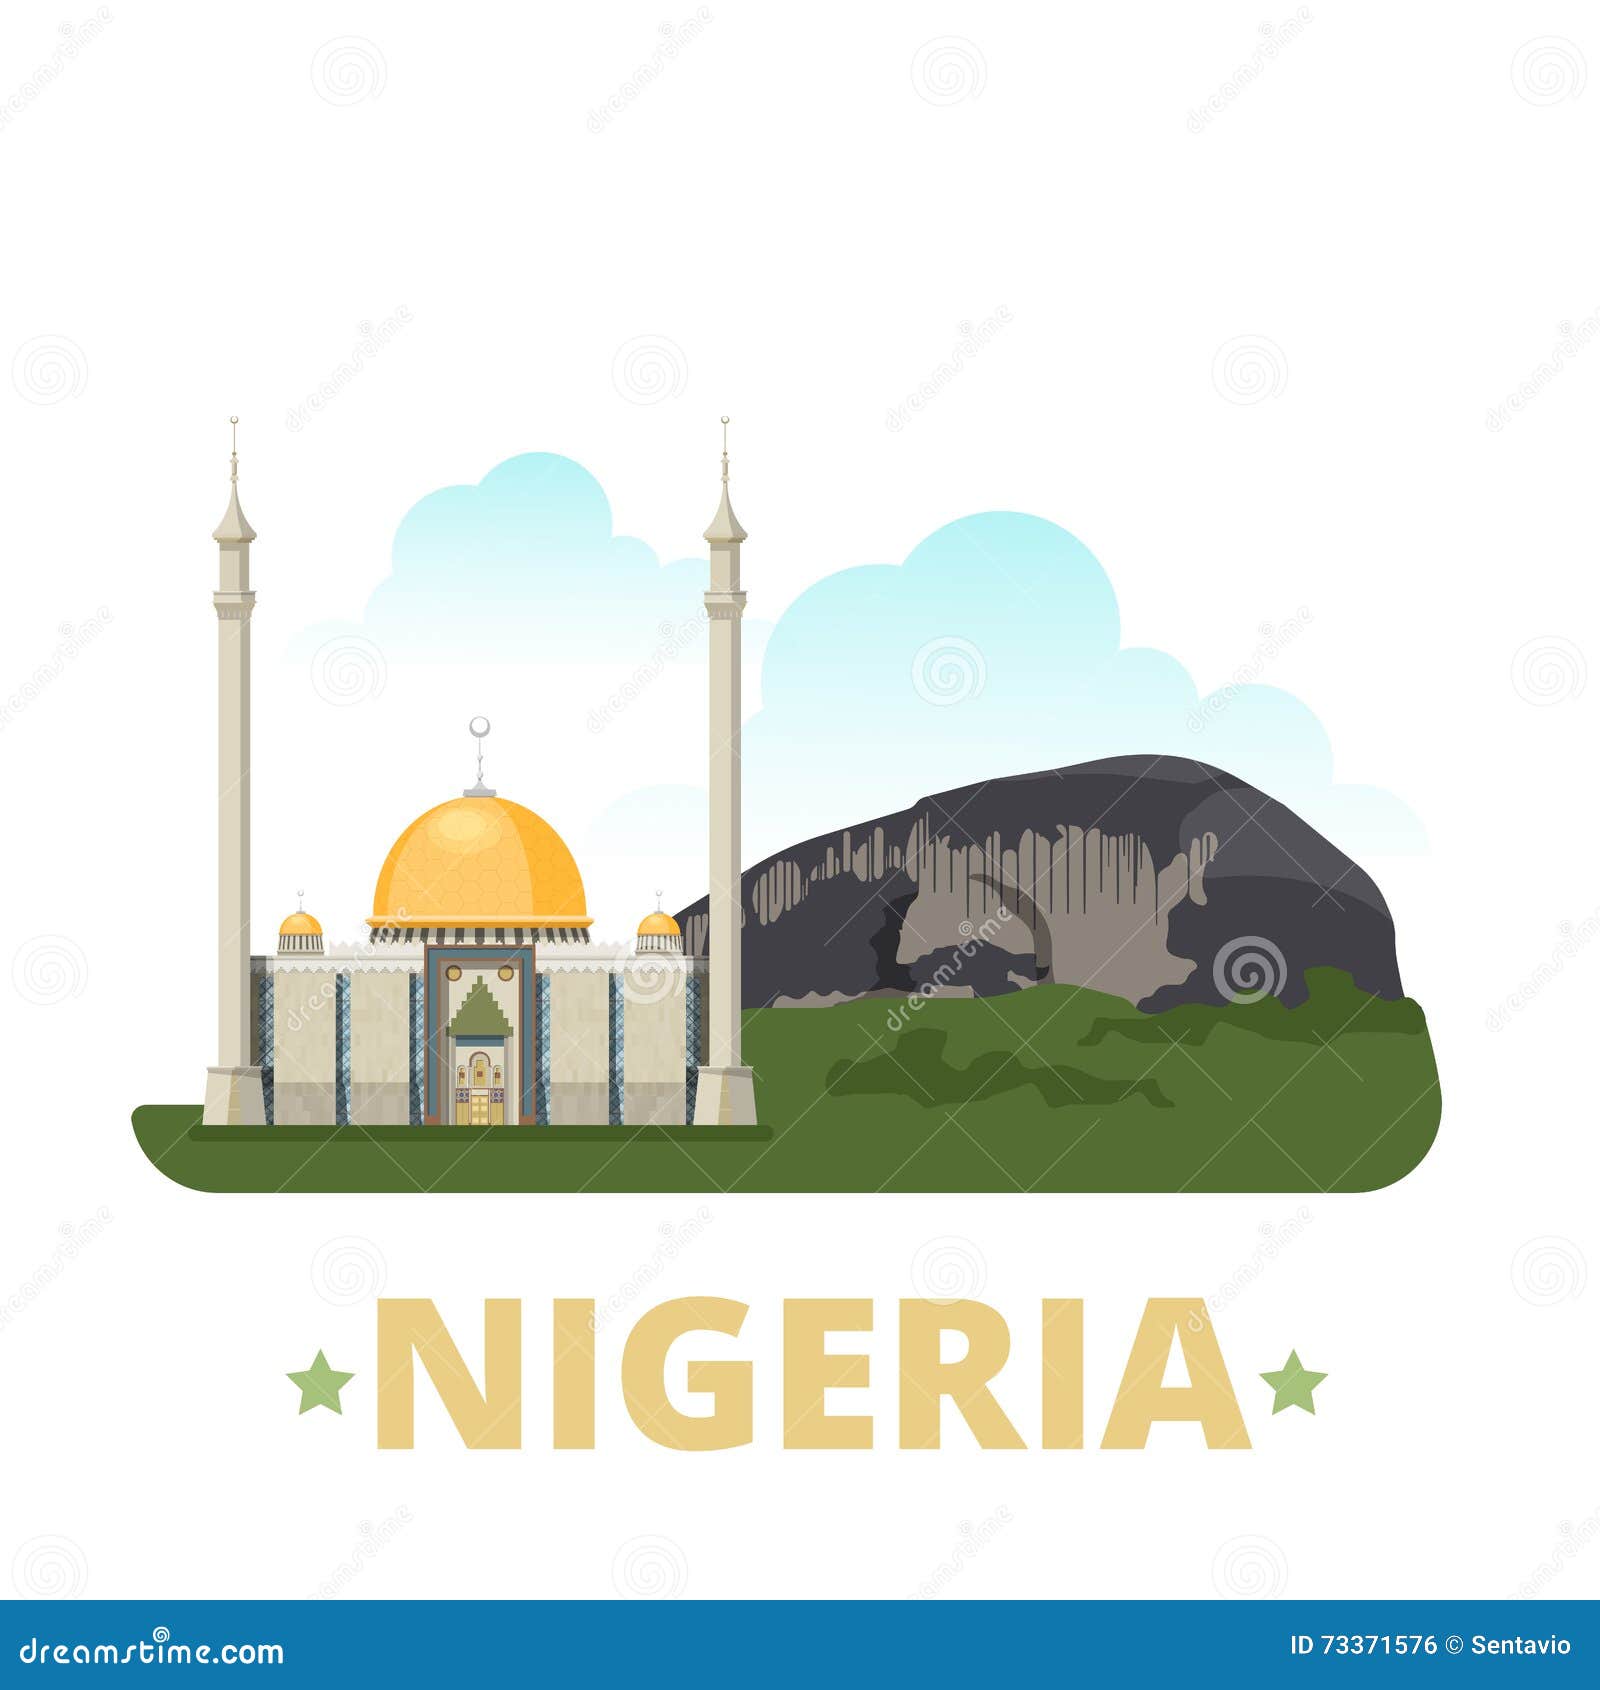 nigeria country  template flat cartoon style